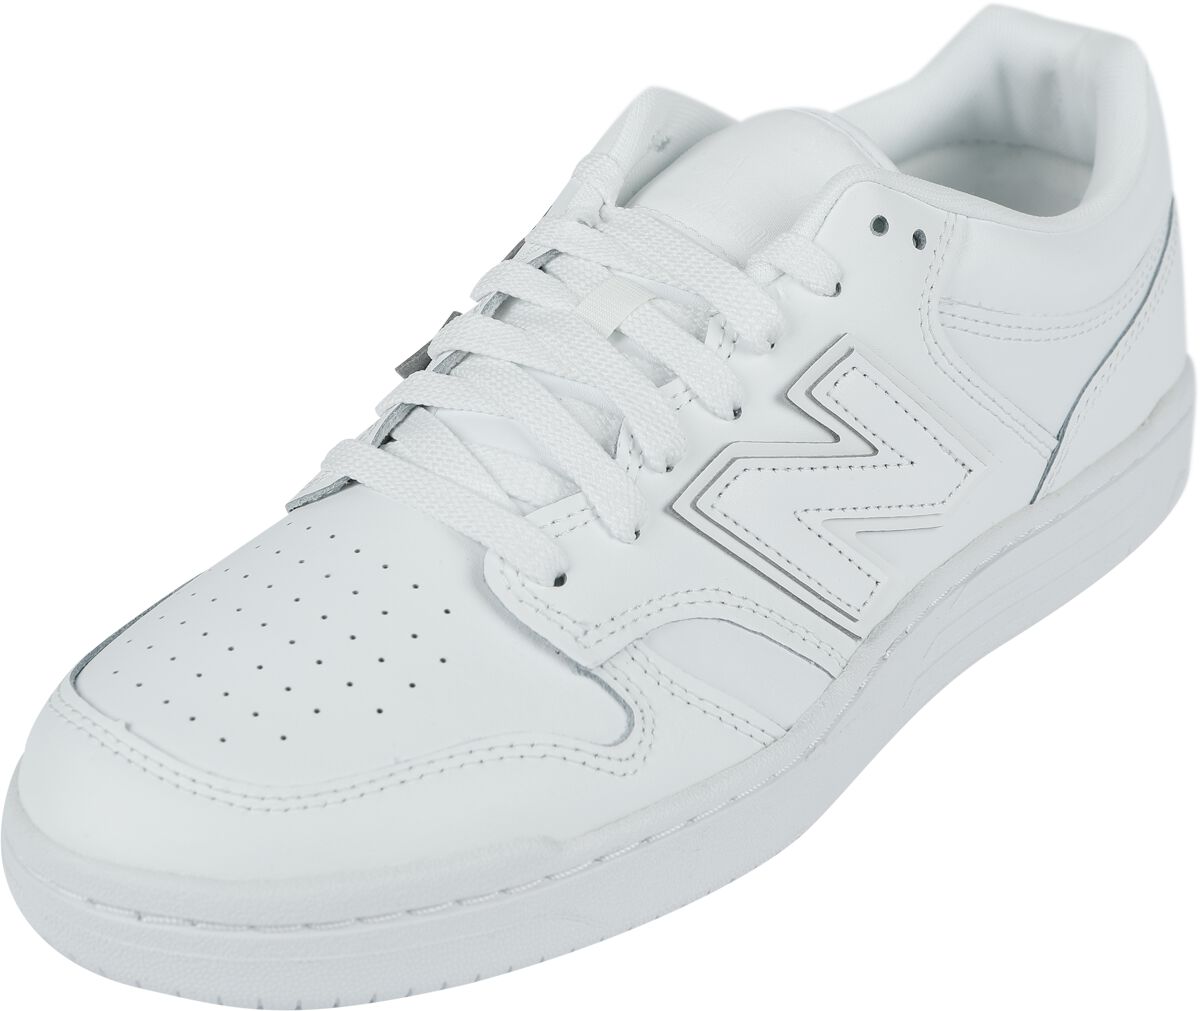 New Balance Sneaker - 480L - EU41 bis 5 - für Männer - Größe EU45 - weiß